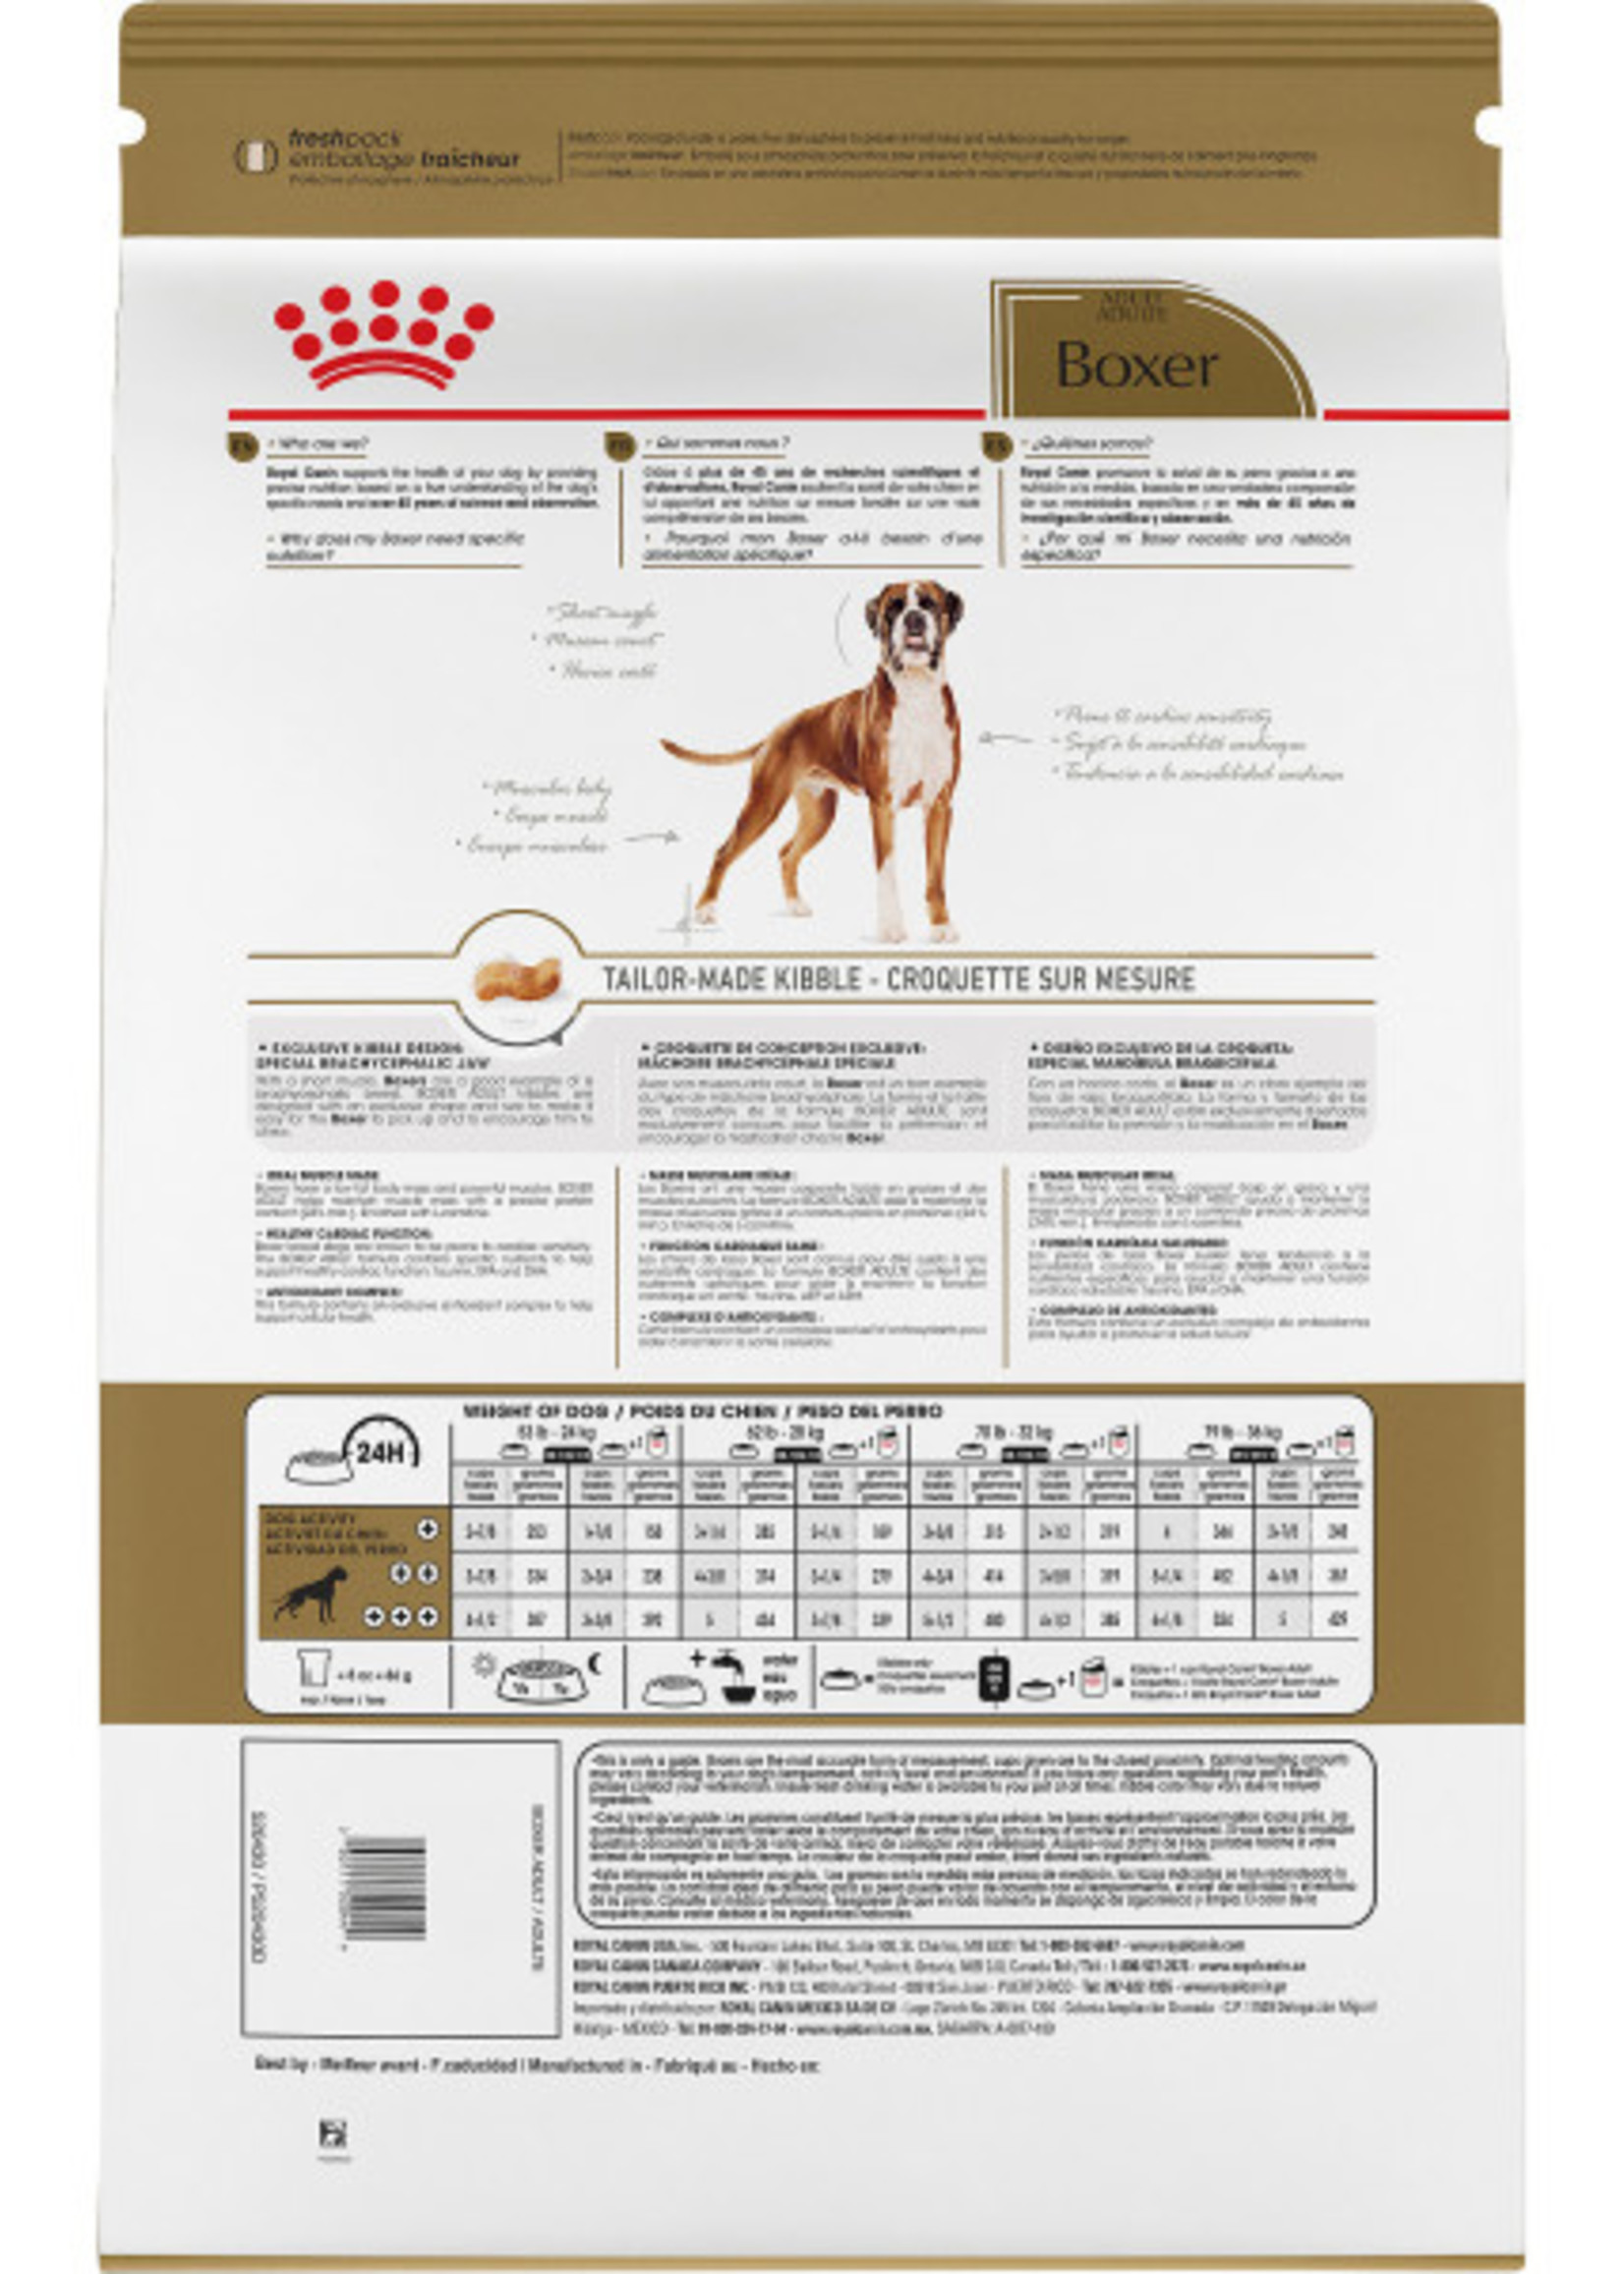 Royal Canin® Royal Canin Dog Boxer 30lb